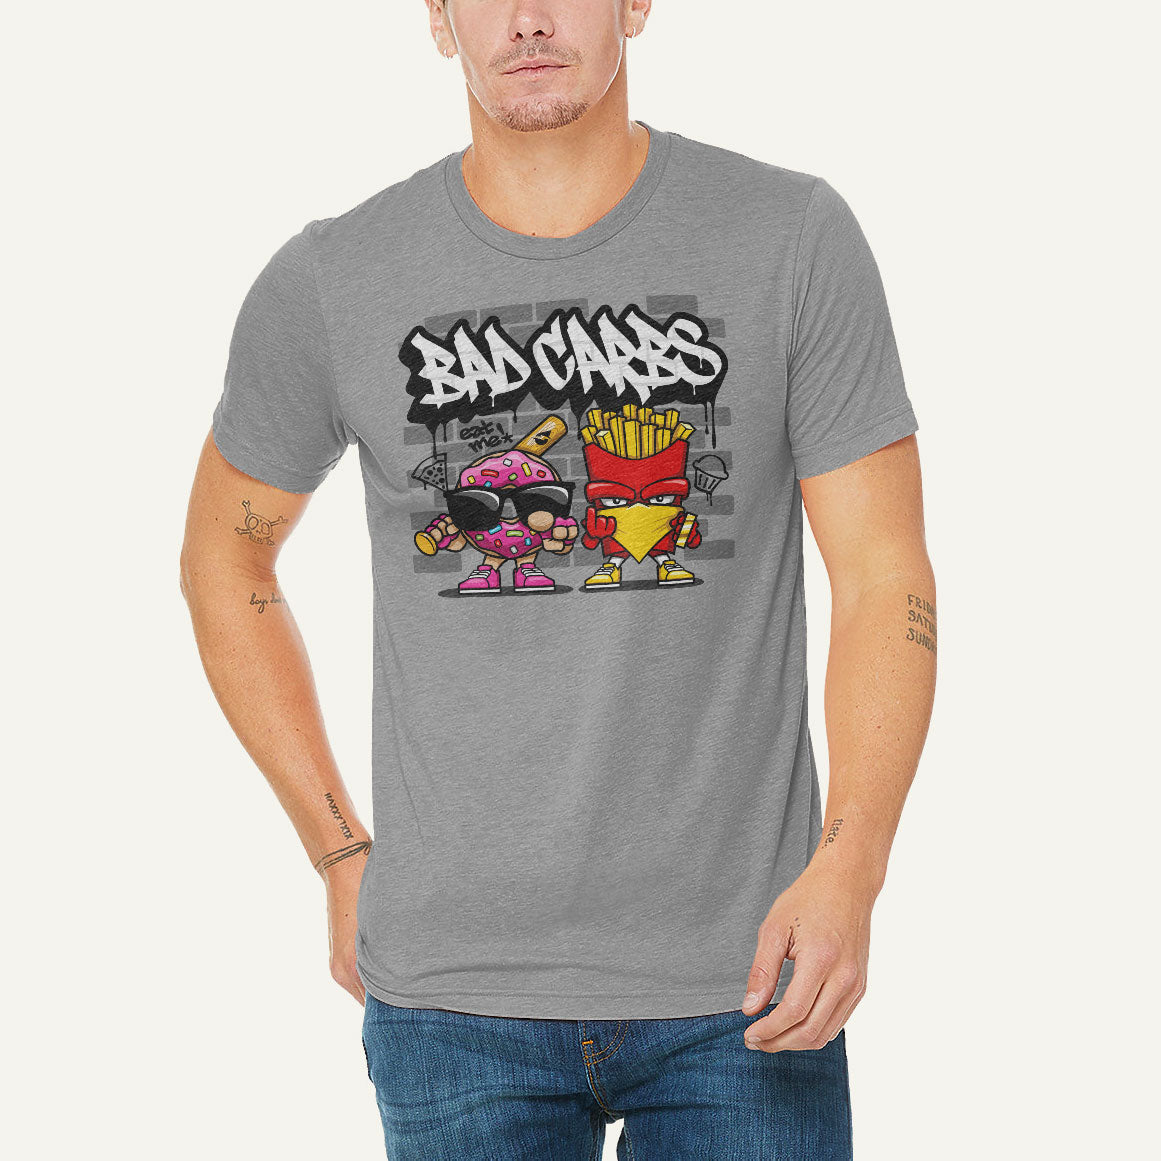 Bad Carbs Men’s Triblend T-Shirt